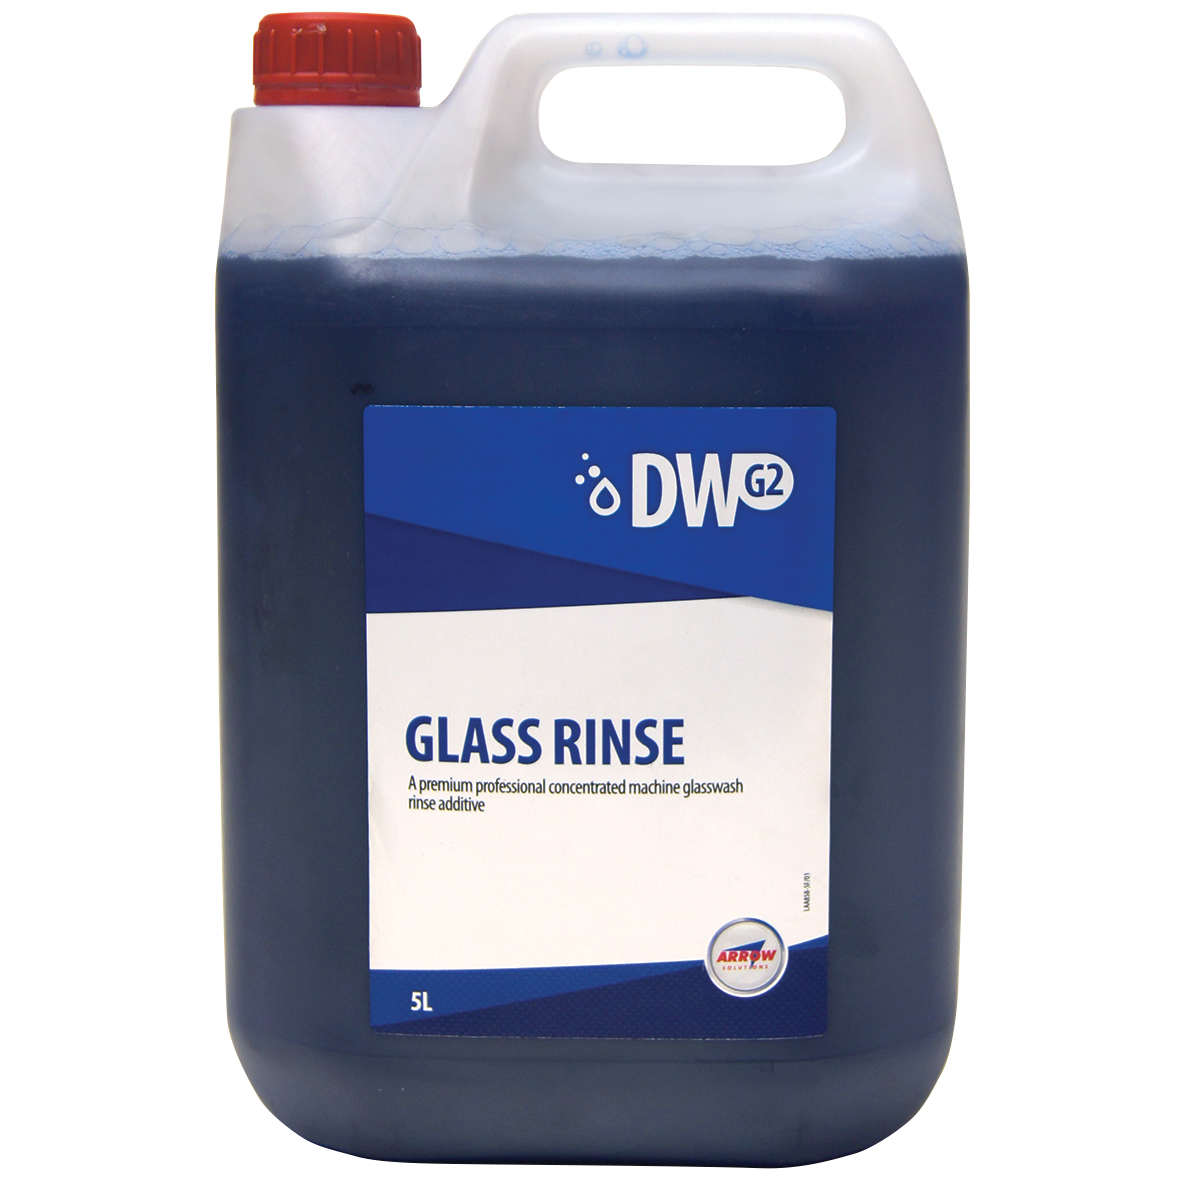 DW G2 Glassrinse product image